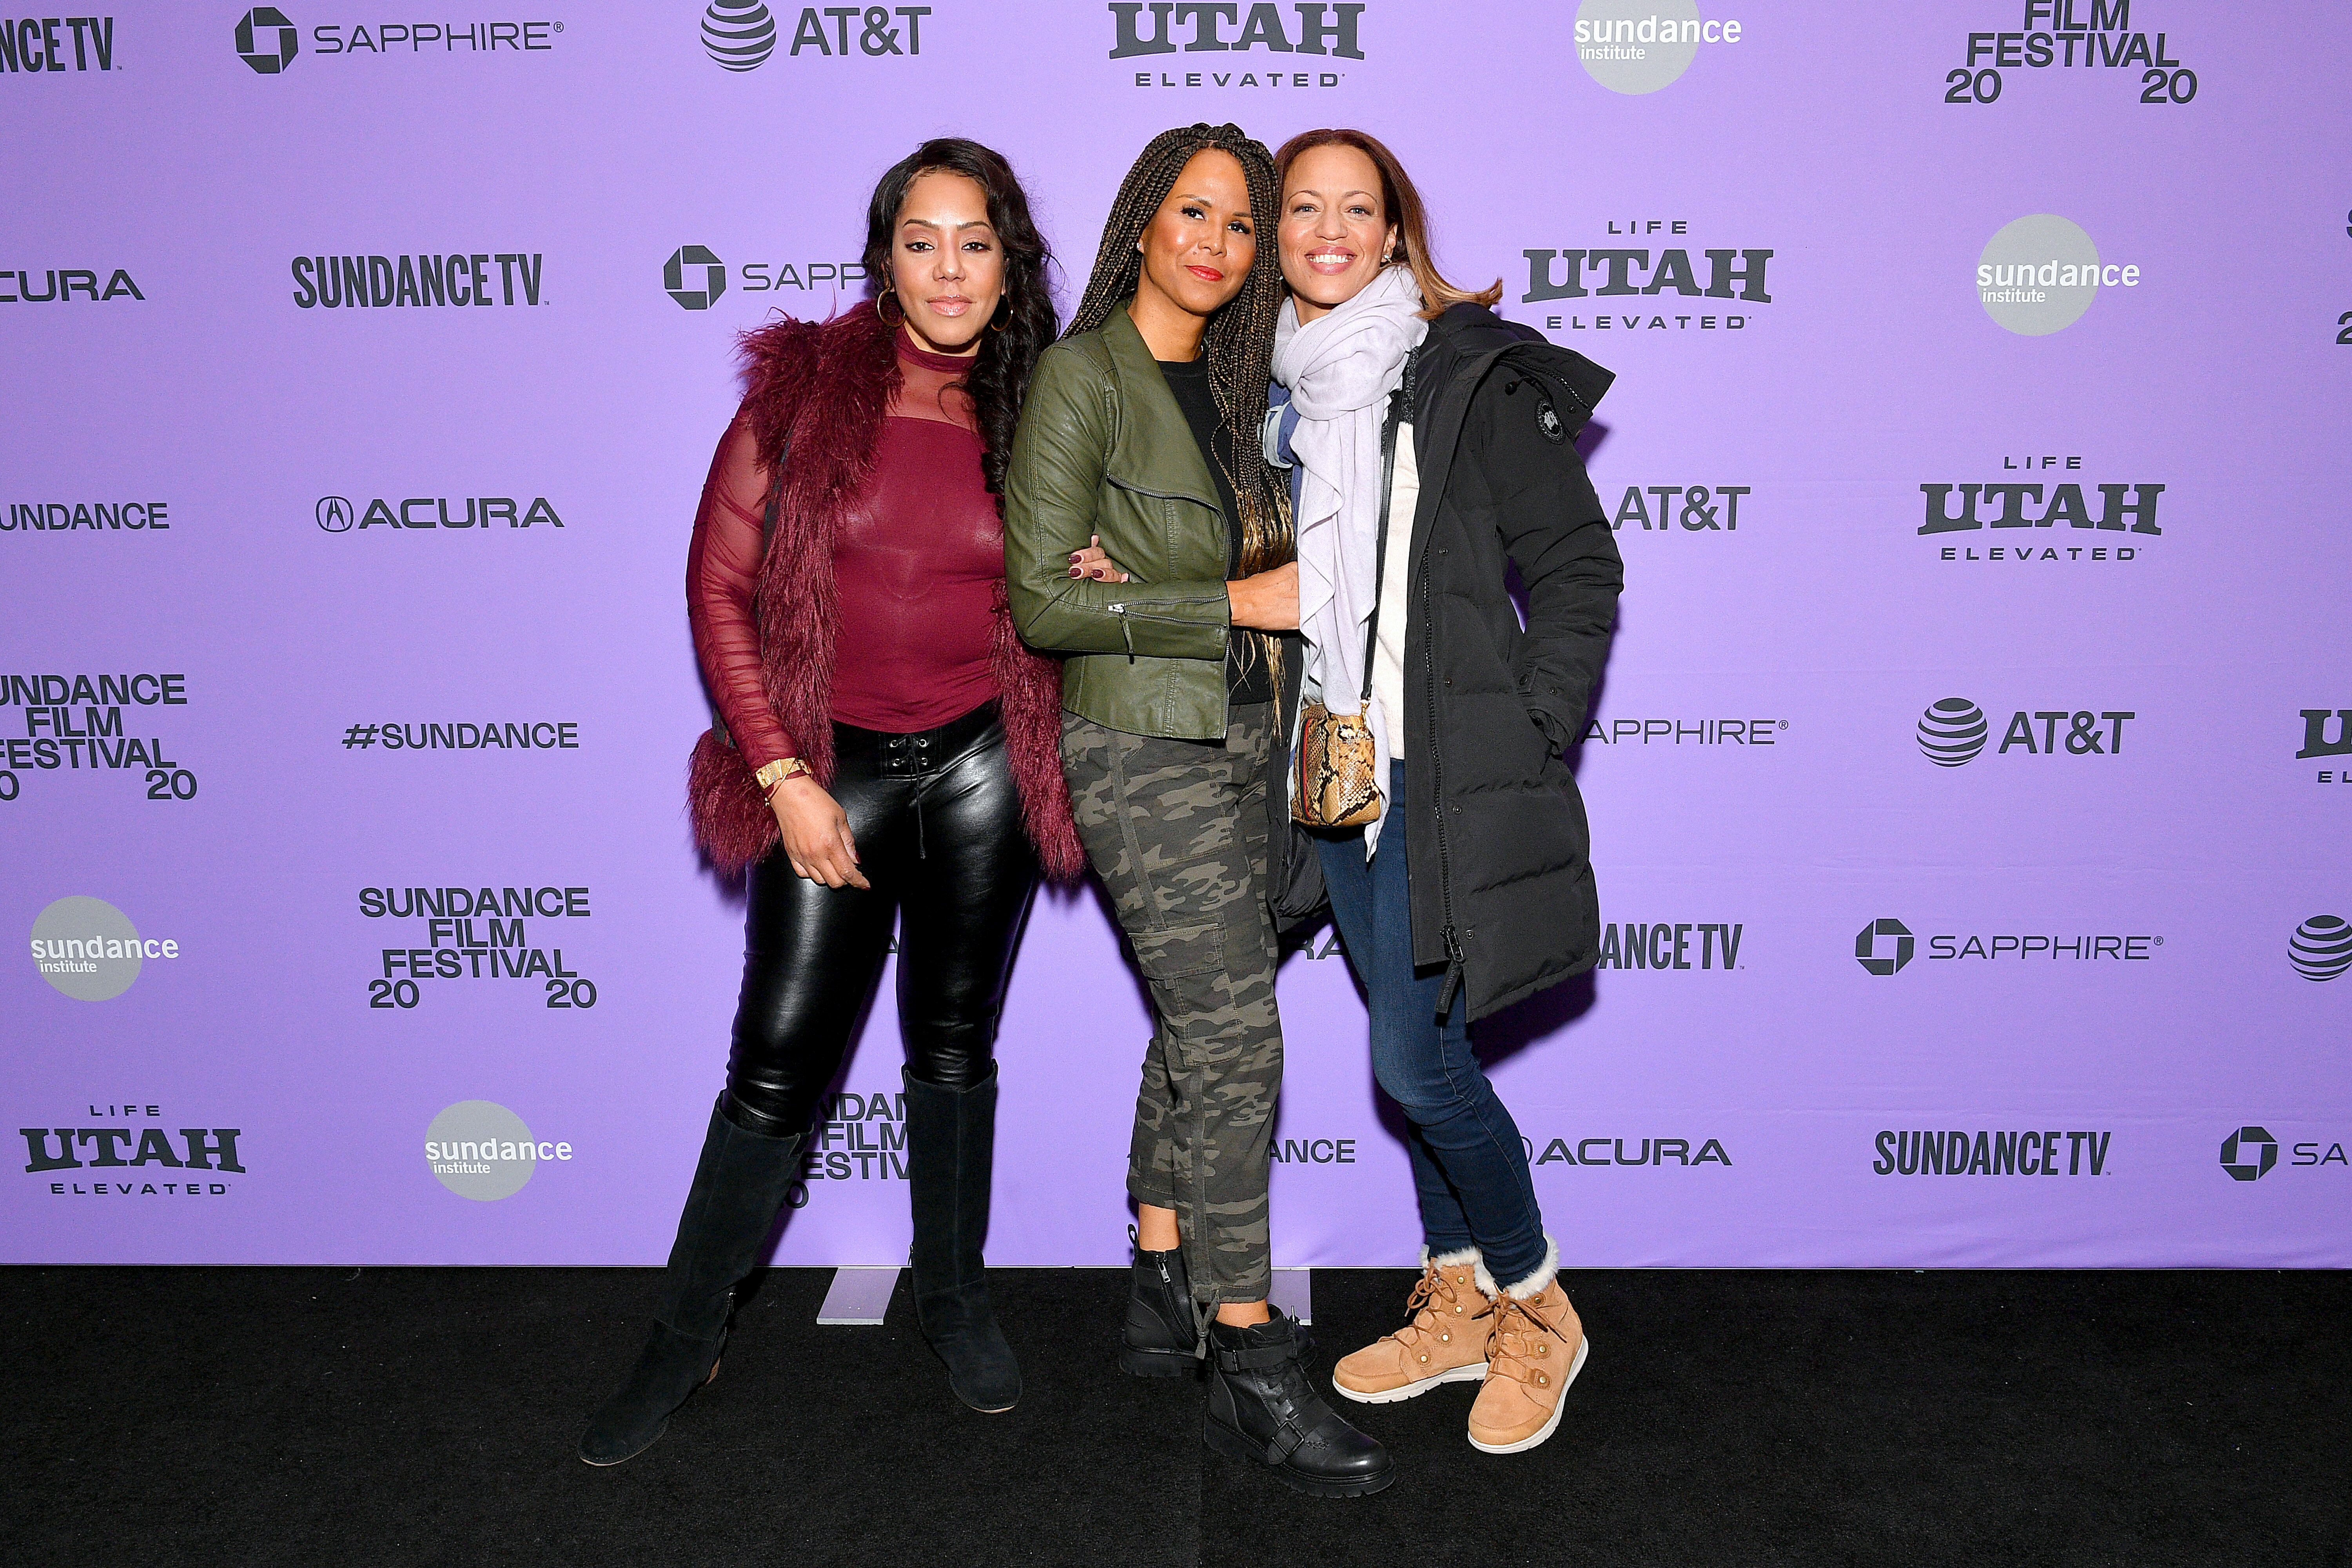 Survivors Sherri Hines, Sil Lai Abrams, and Drew Dixon attend the 2020 Sundance Film Festival "On The Record" Premiere at The